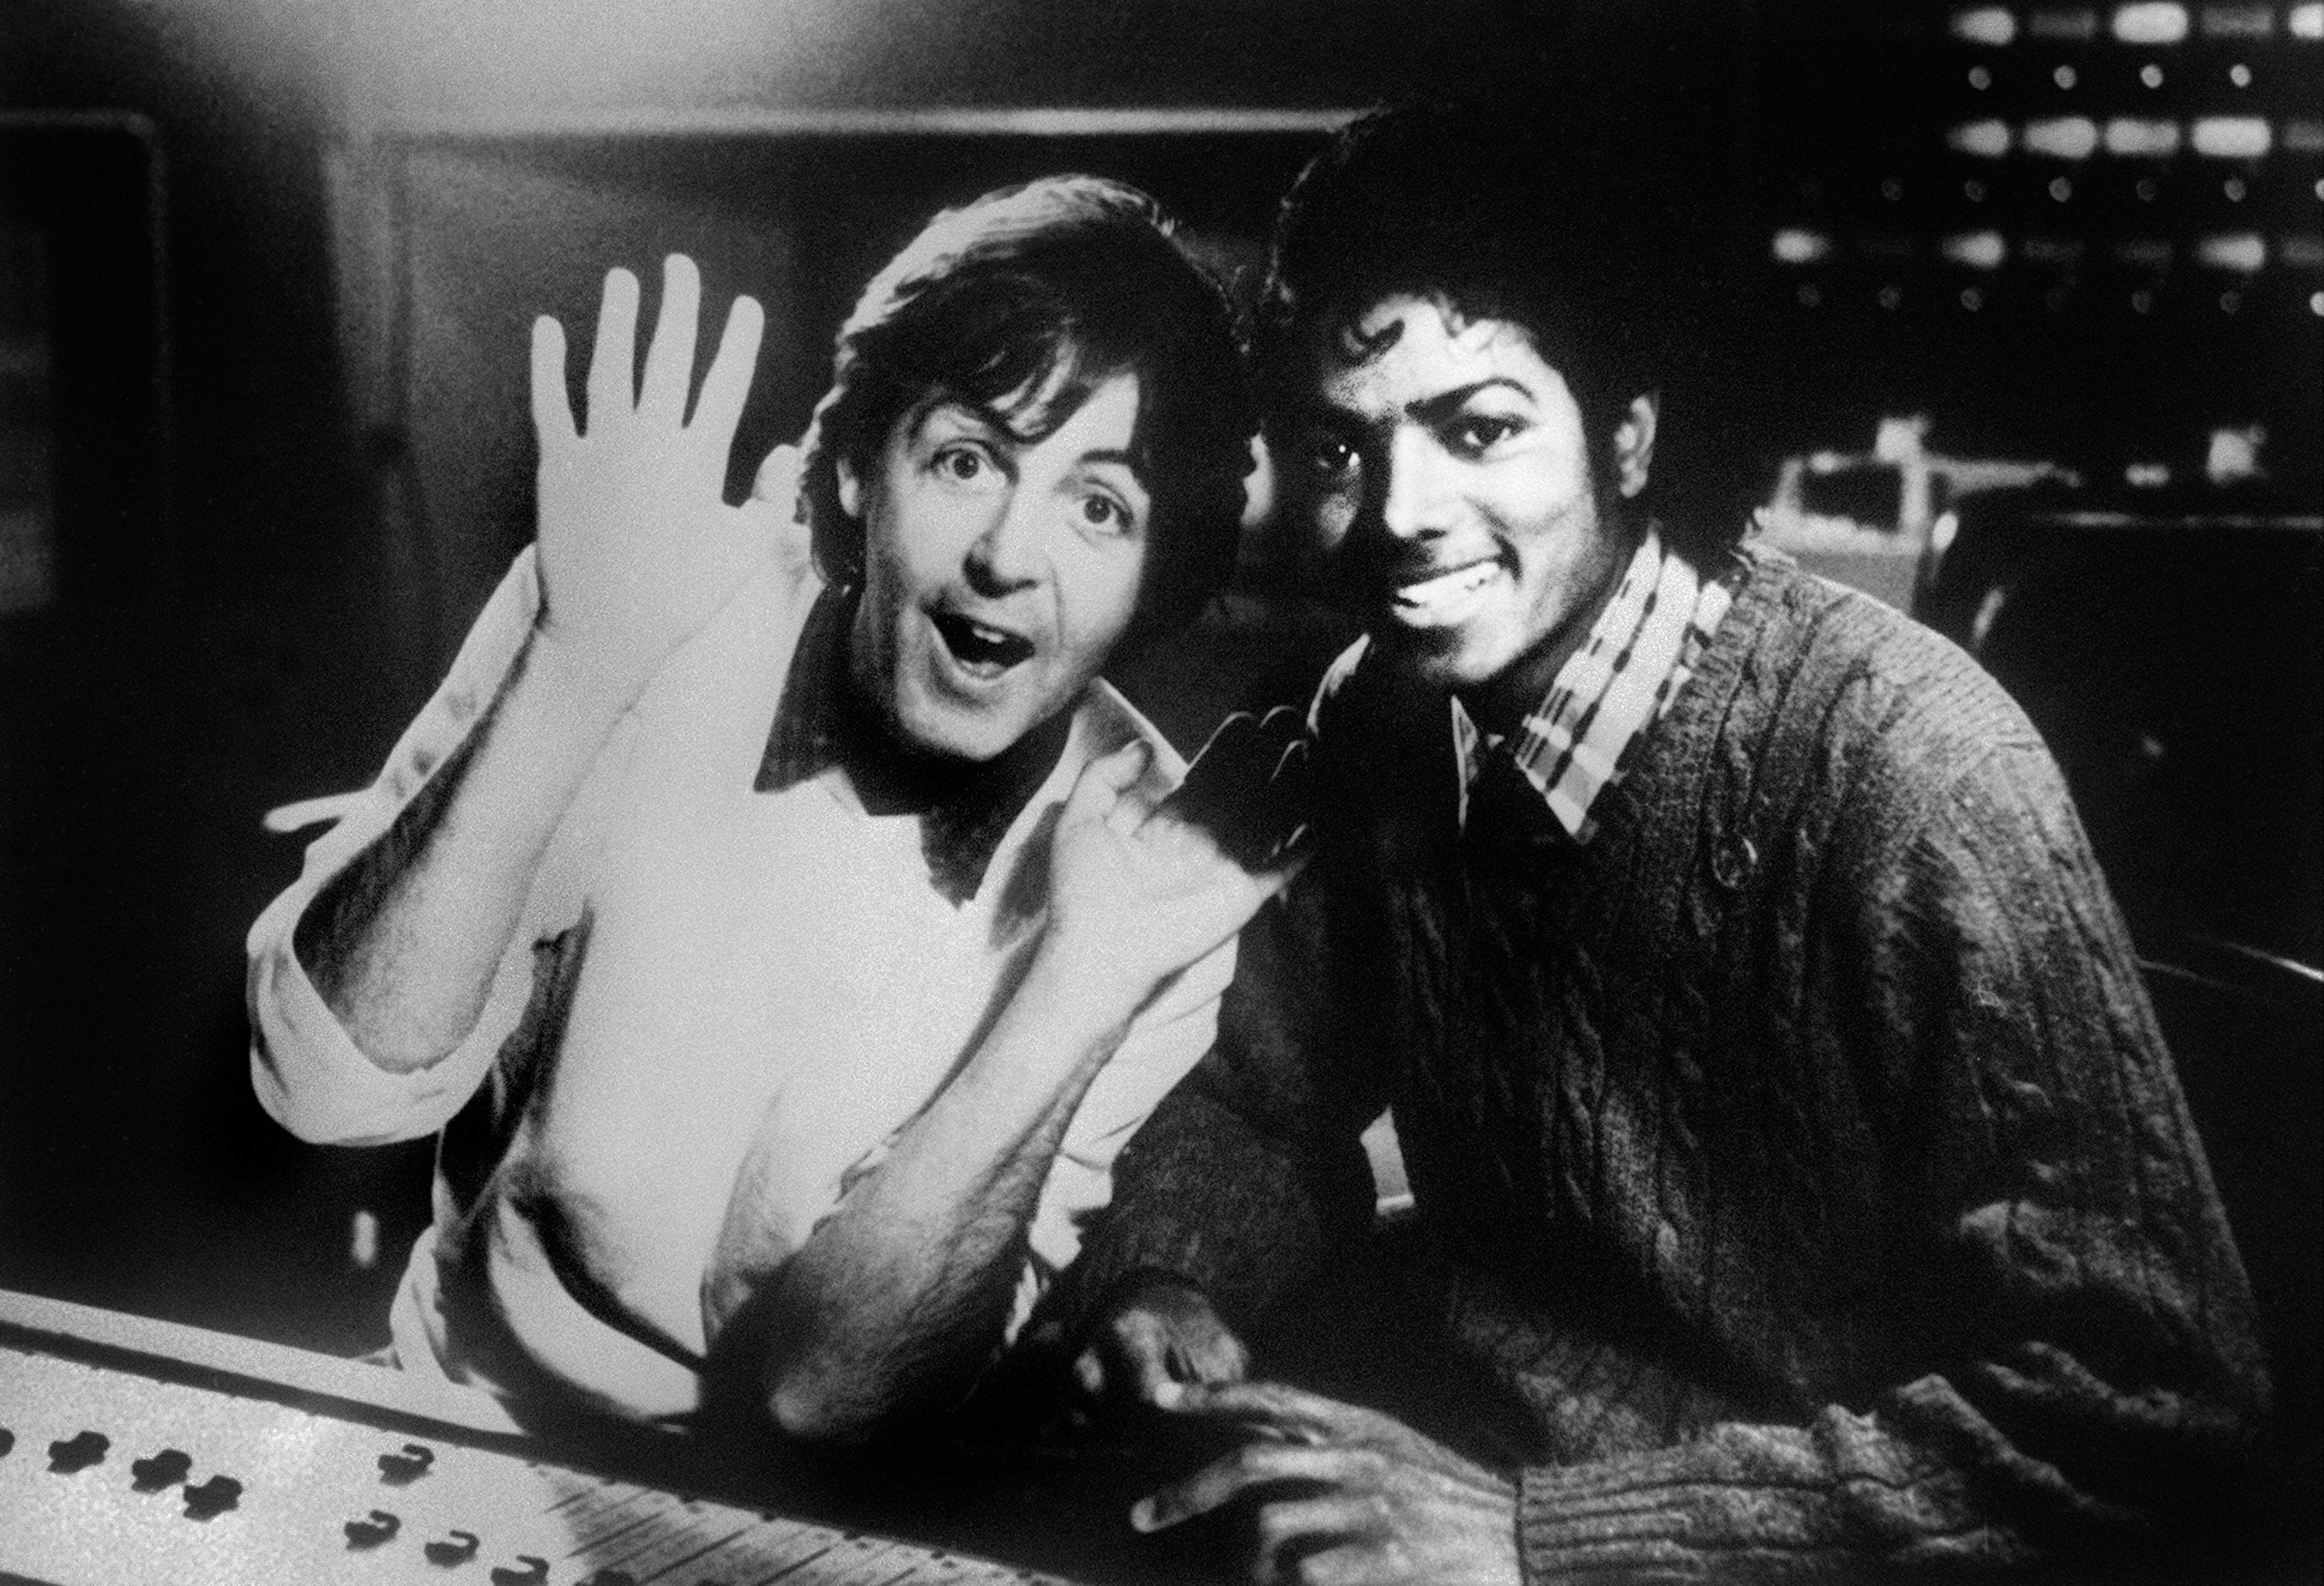 Paul McCartney and Michael Jackson near a switchboard